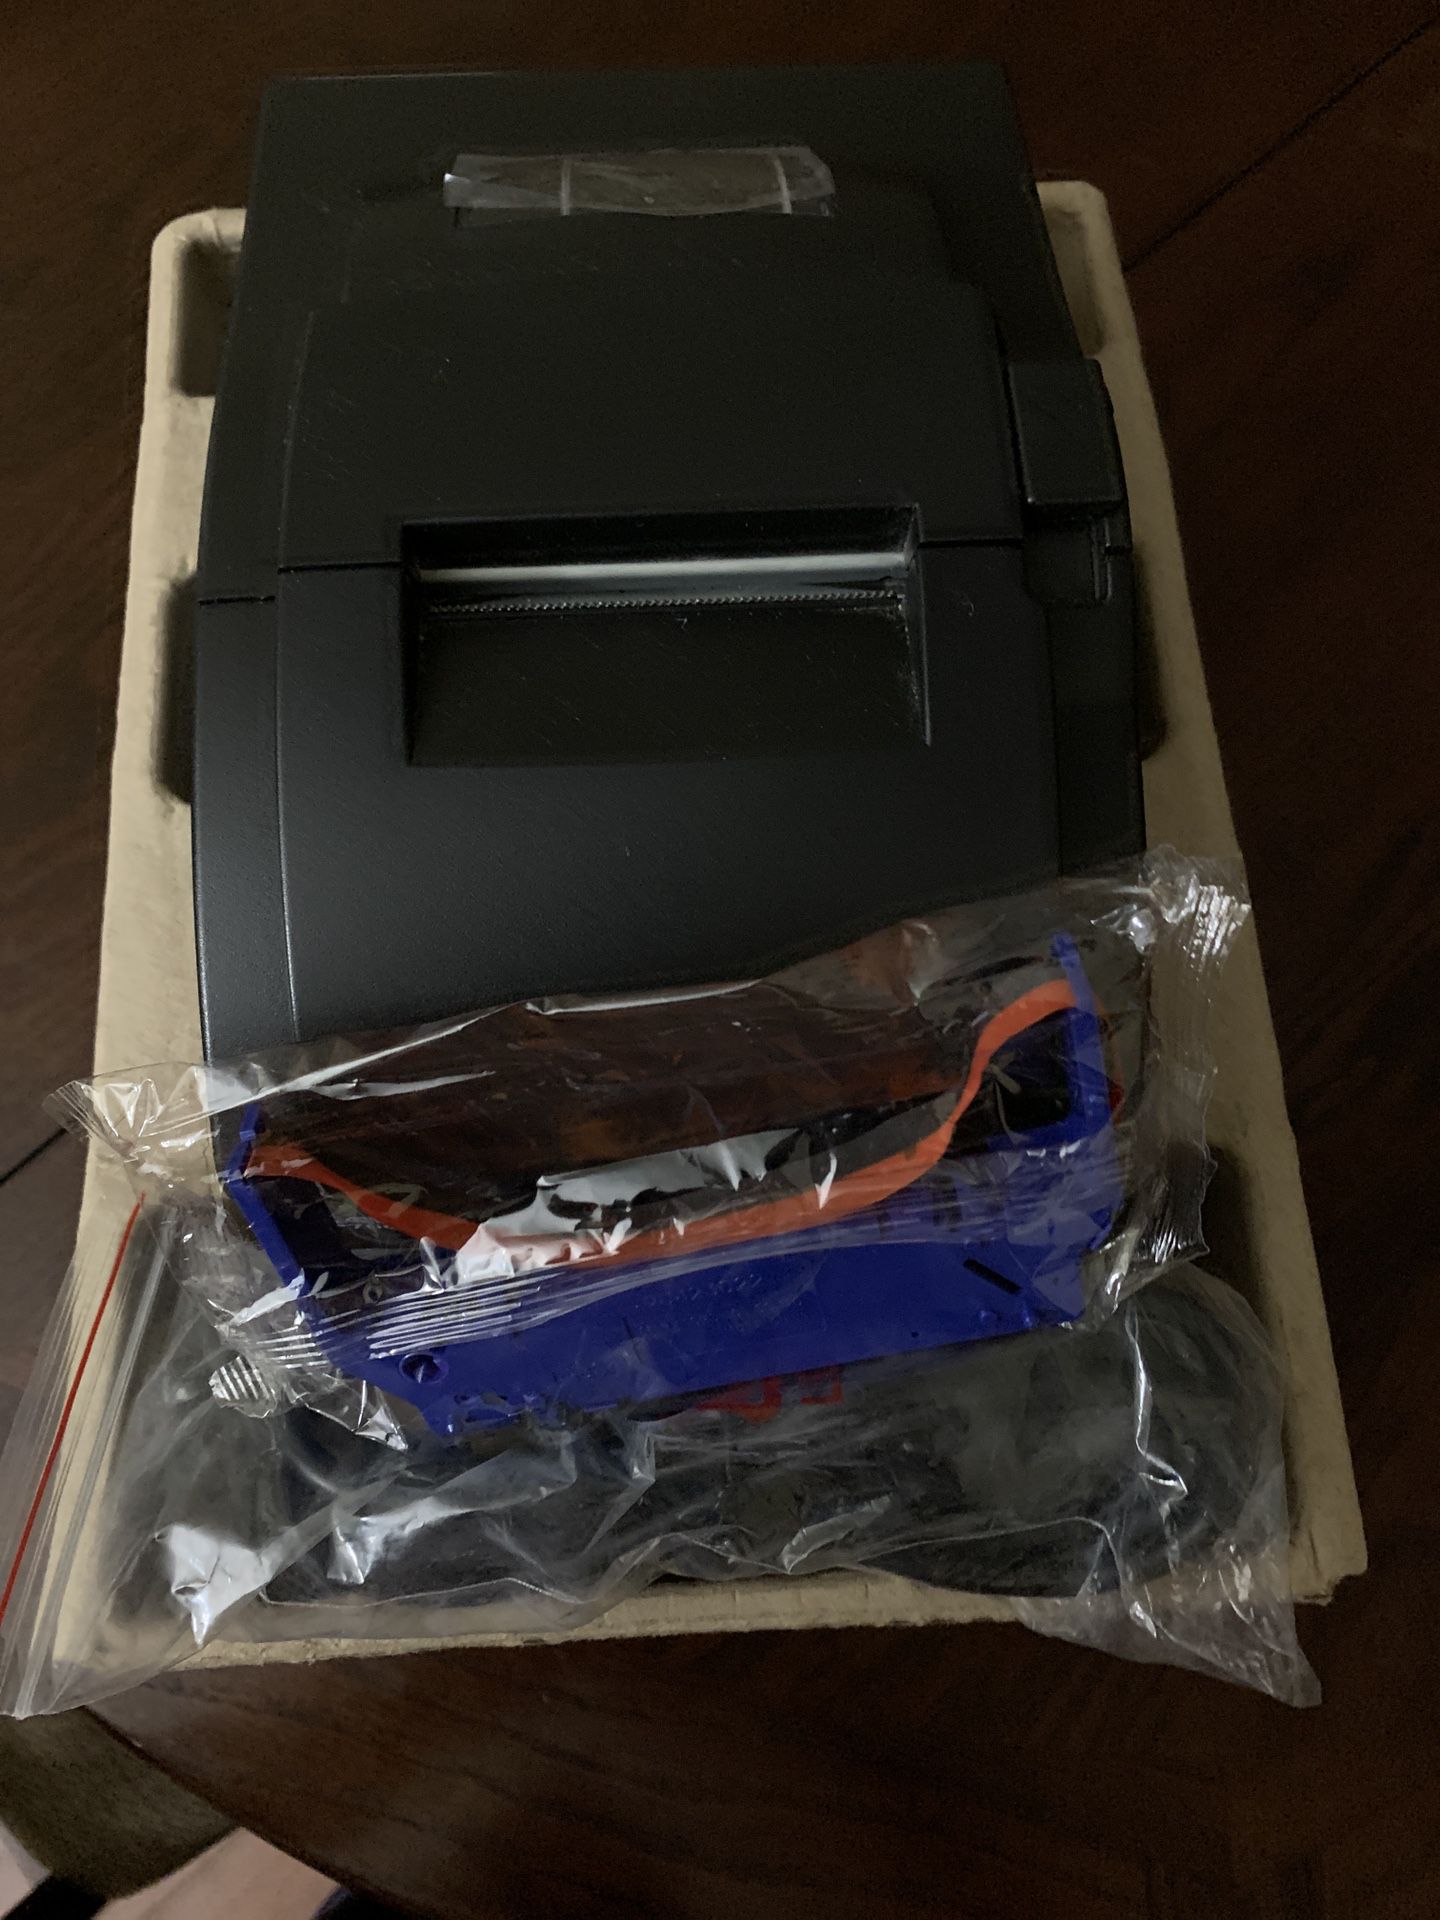 Sp700 receipt printer